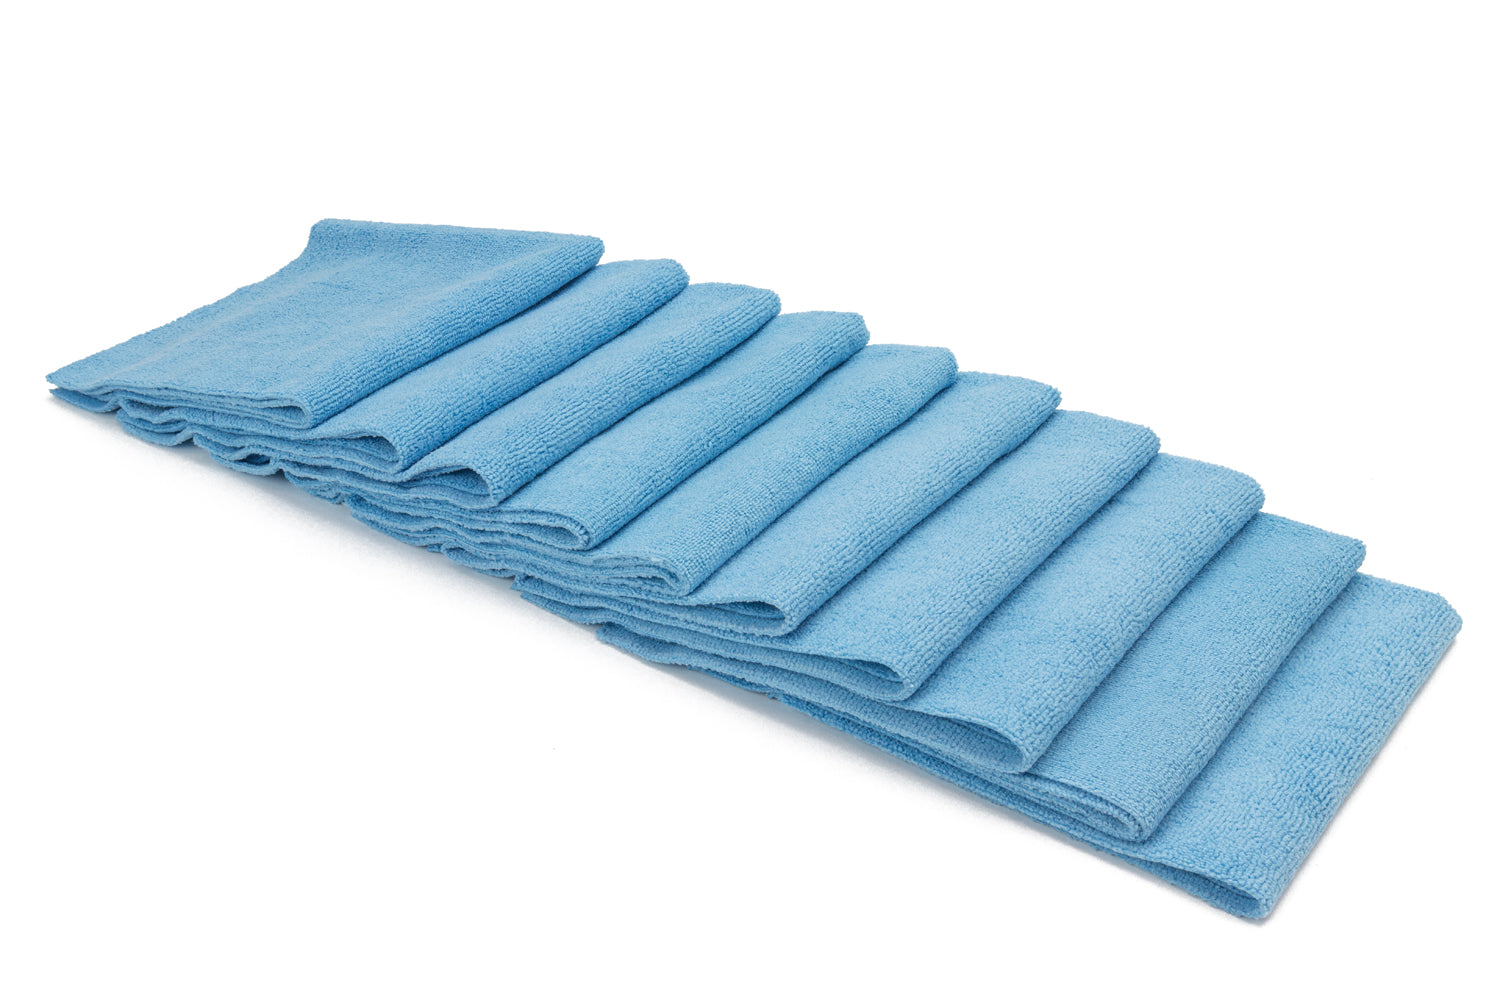 Autofiber Blue / Edgeless [Utility 300] All-Purpose Edgeless Microfiber Towel (16 in x 16 in., 300 gsm) 10pack